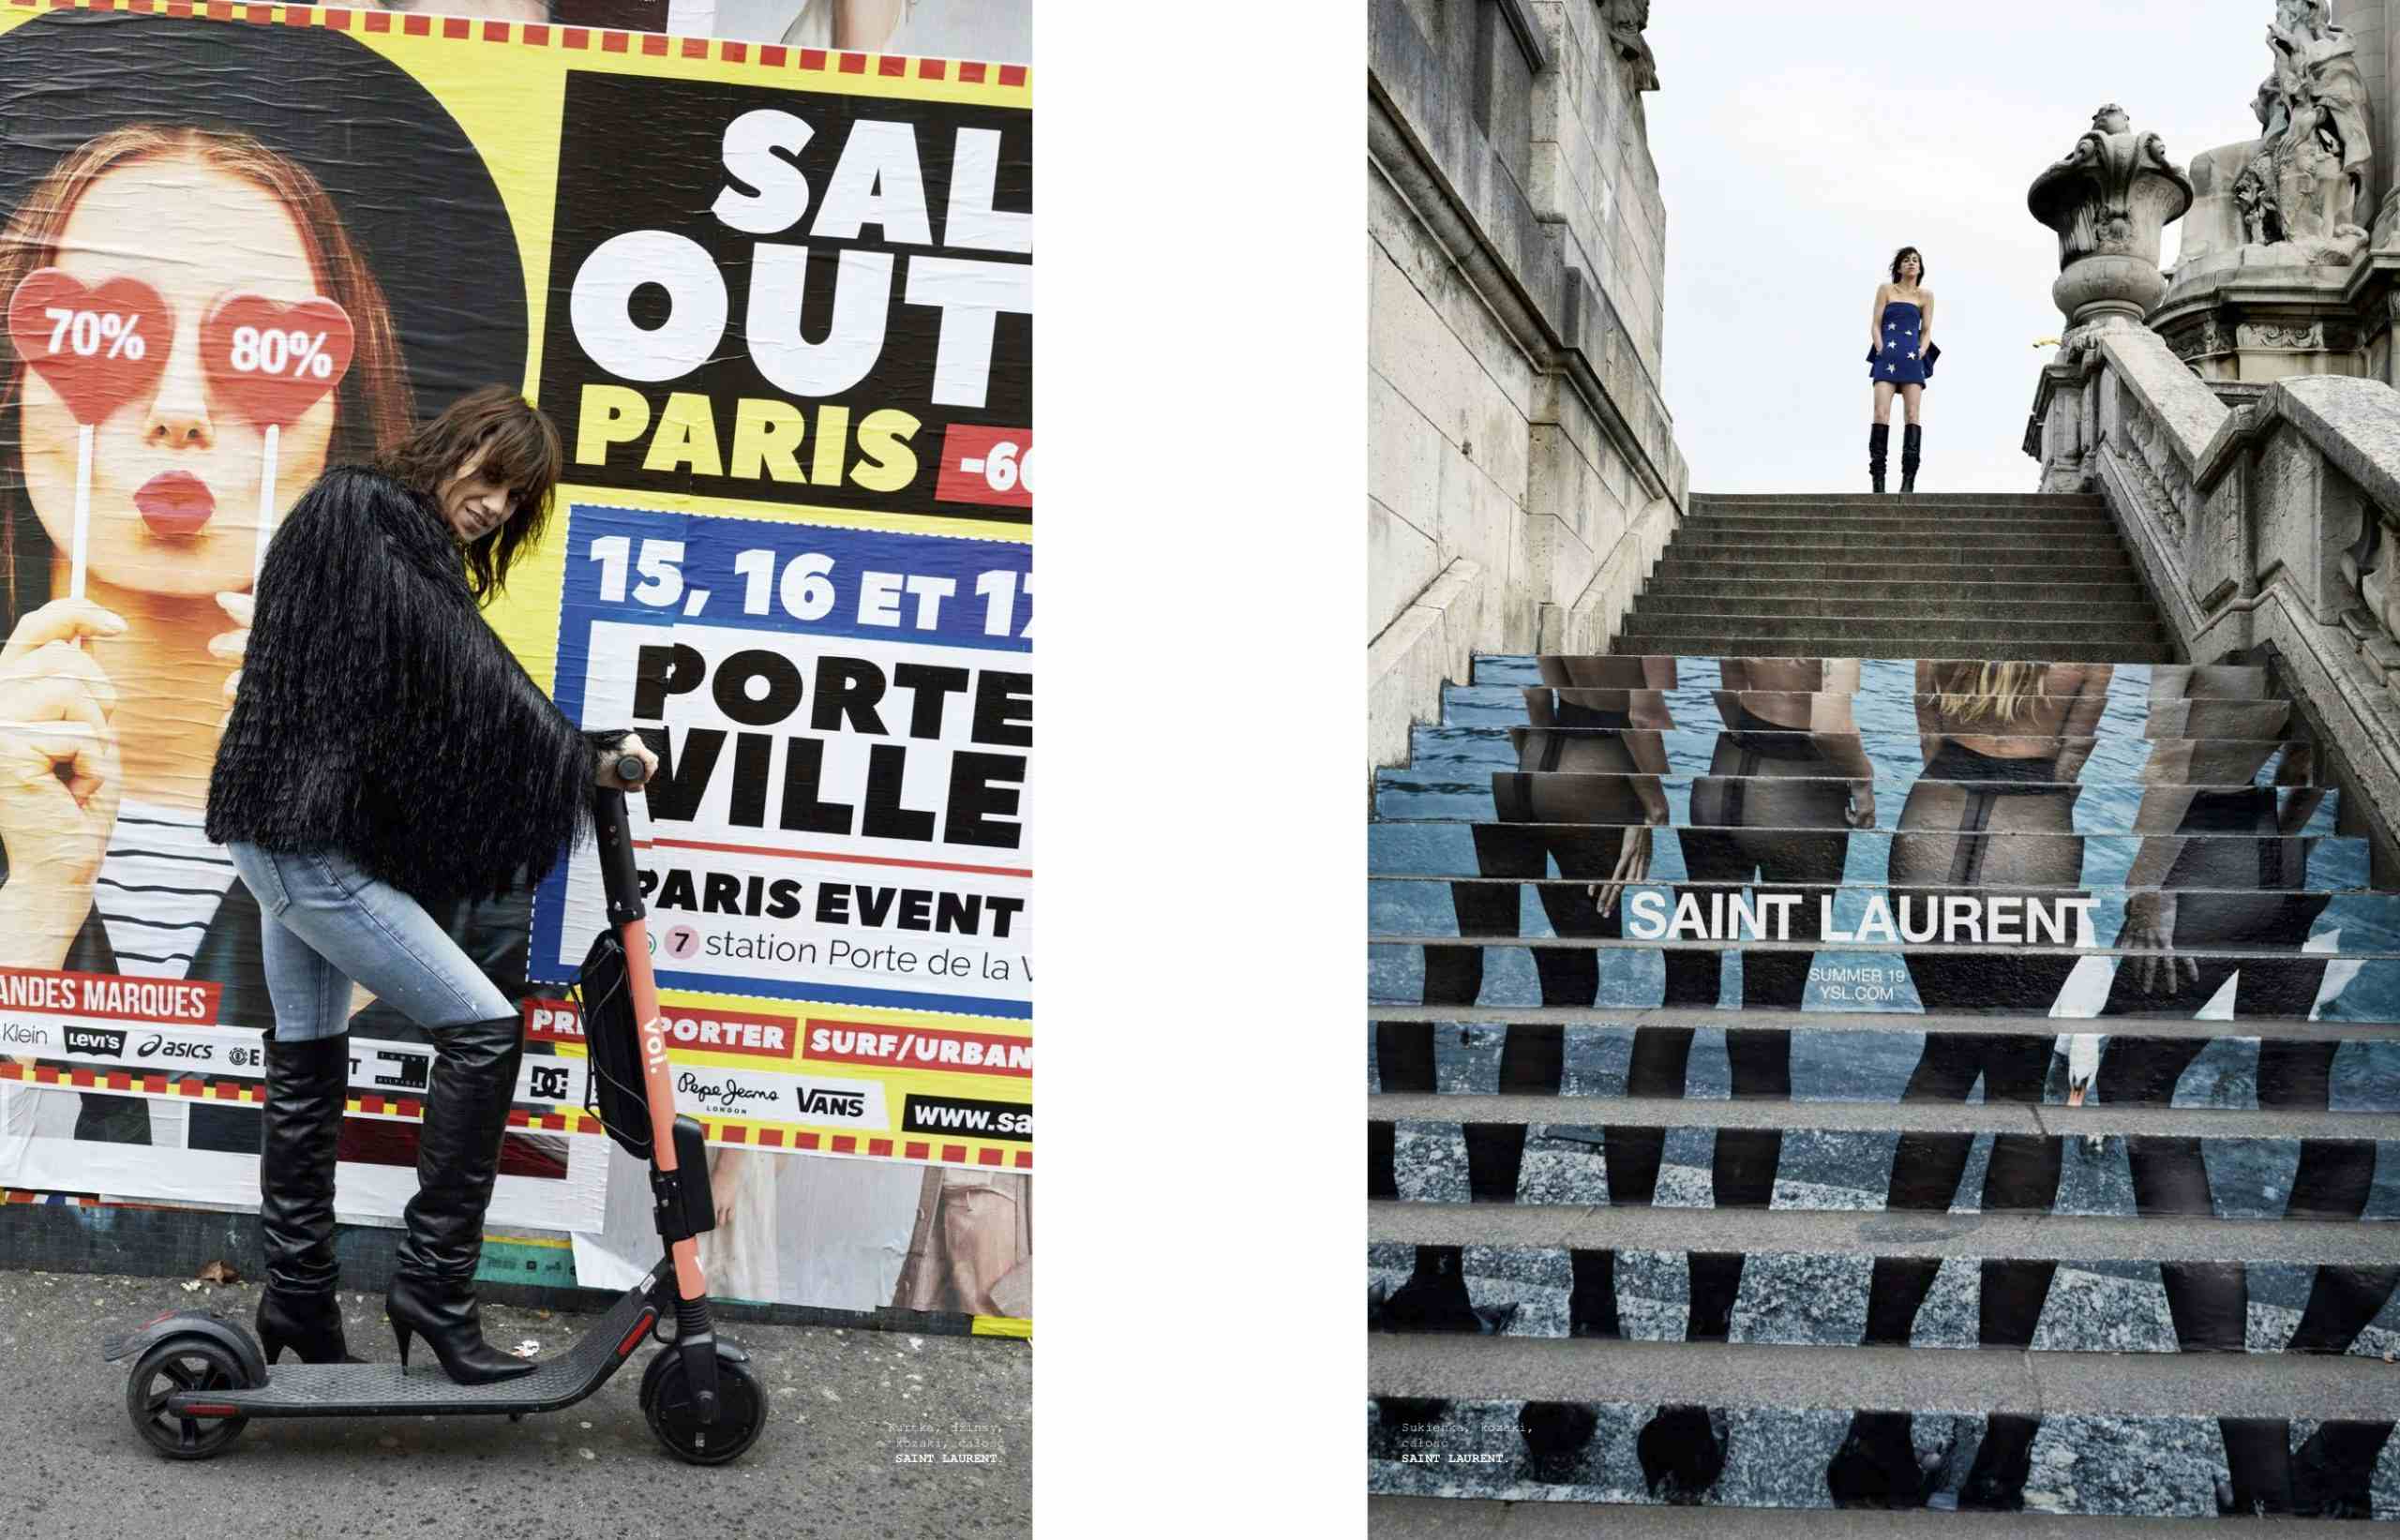 VOGUE POLAND - May 2019
Photographer: Juergen Teller
Model: Charlotte Gainsbourg
Location: Paris